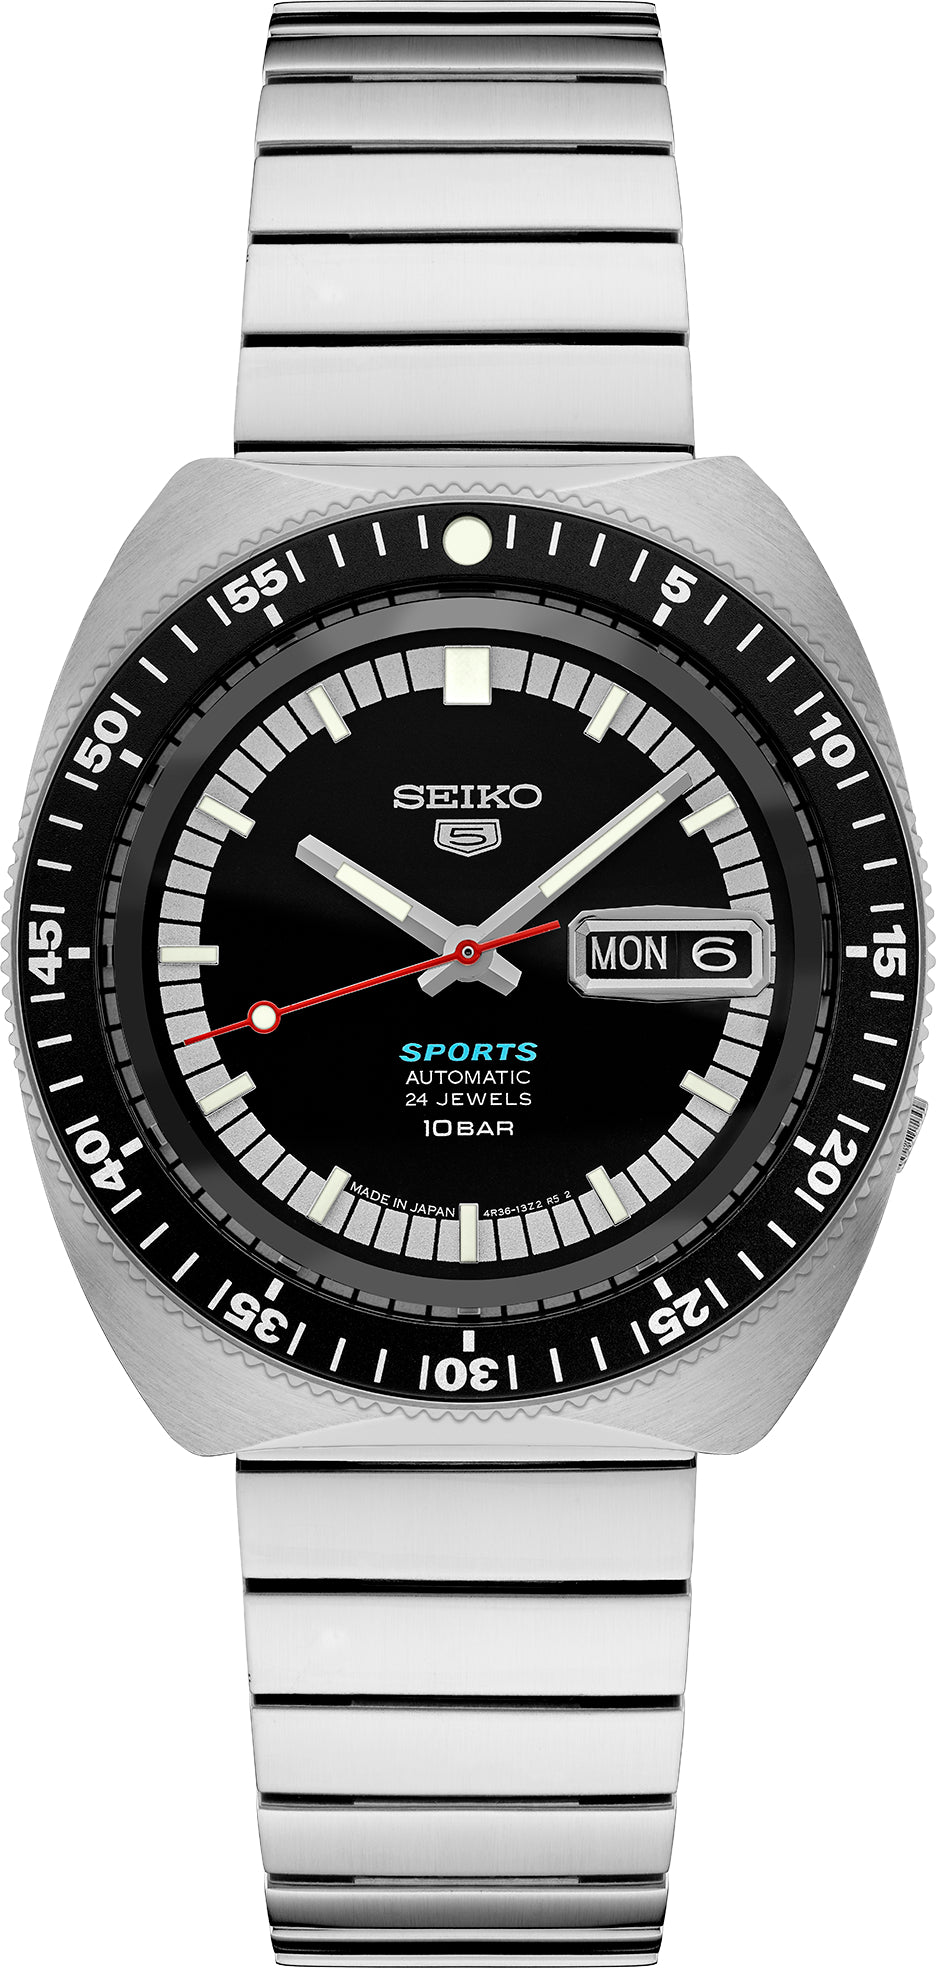 Gts Seiko Automatic Sports Watch Black Dial and Bezel  Watch SRPK17